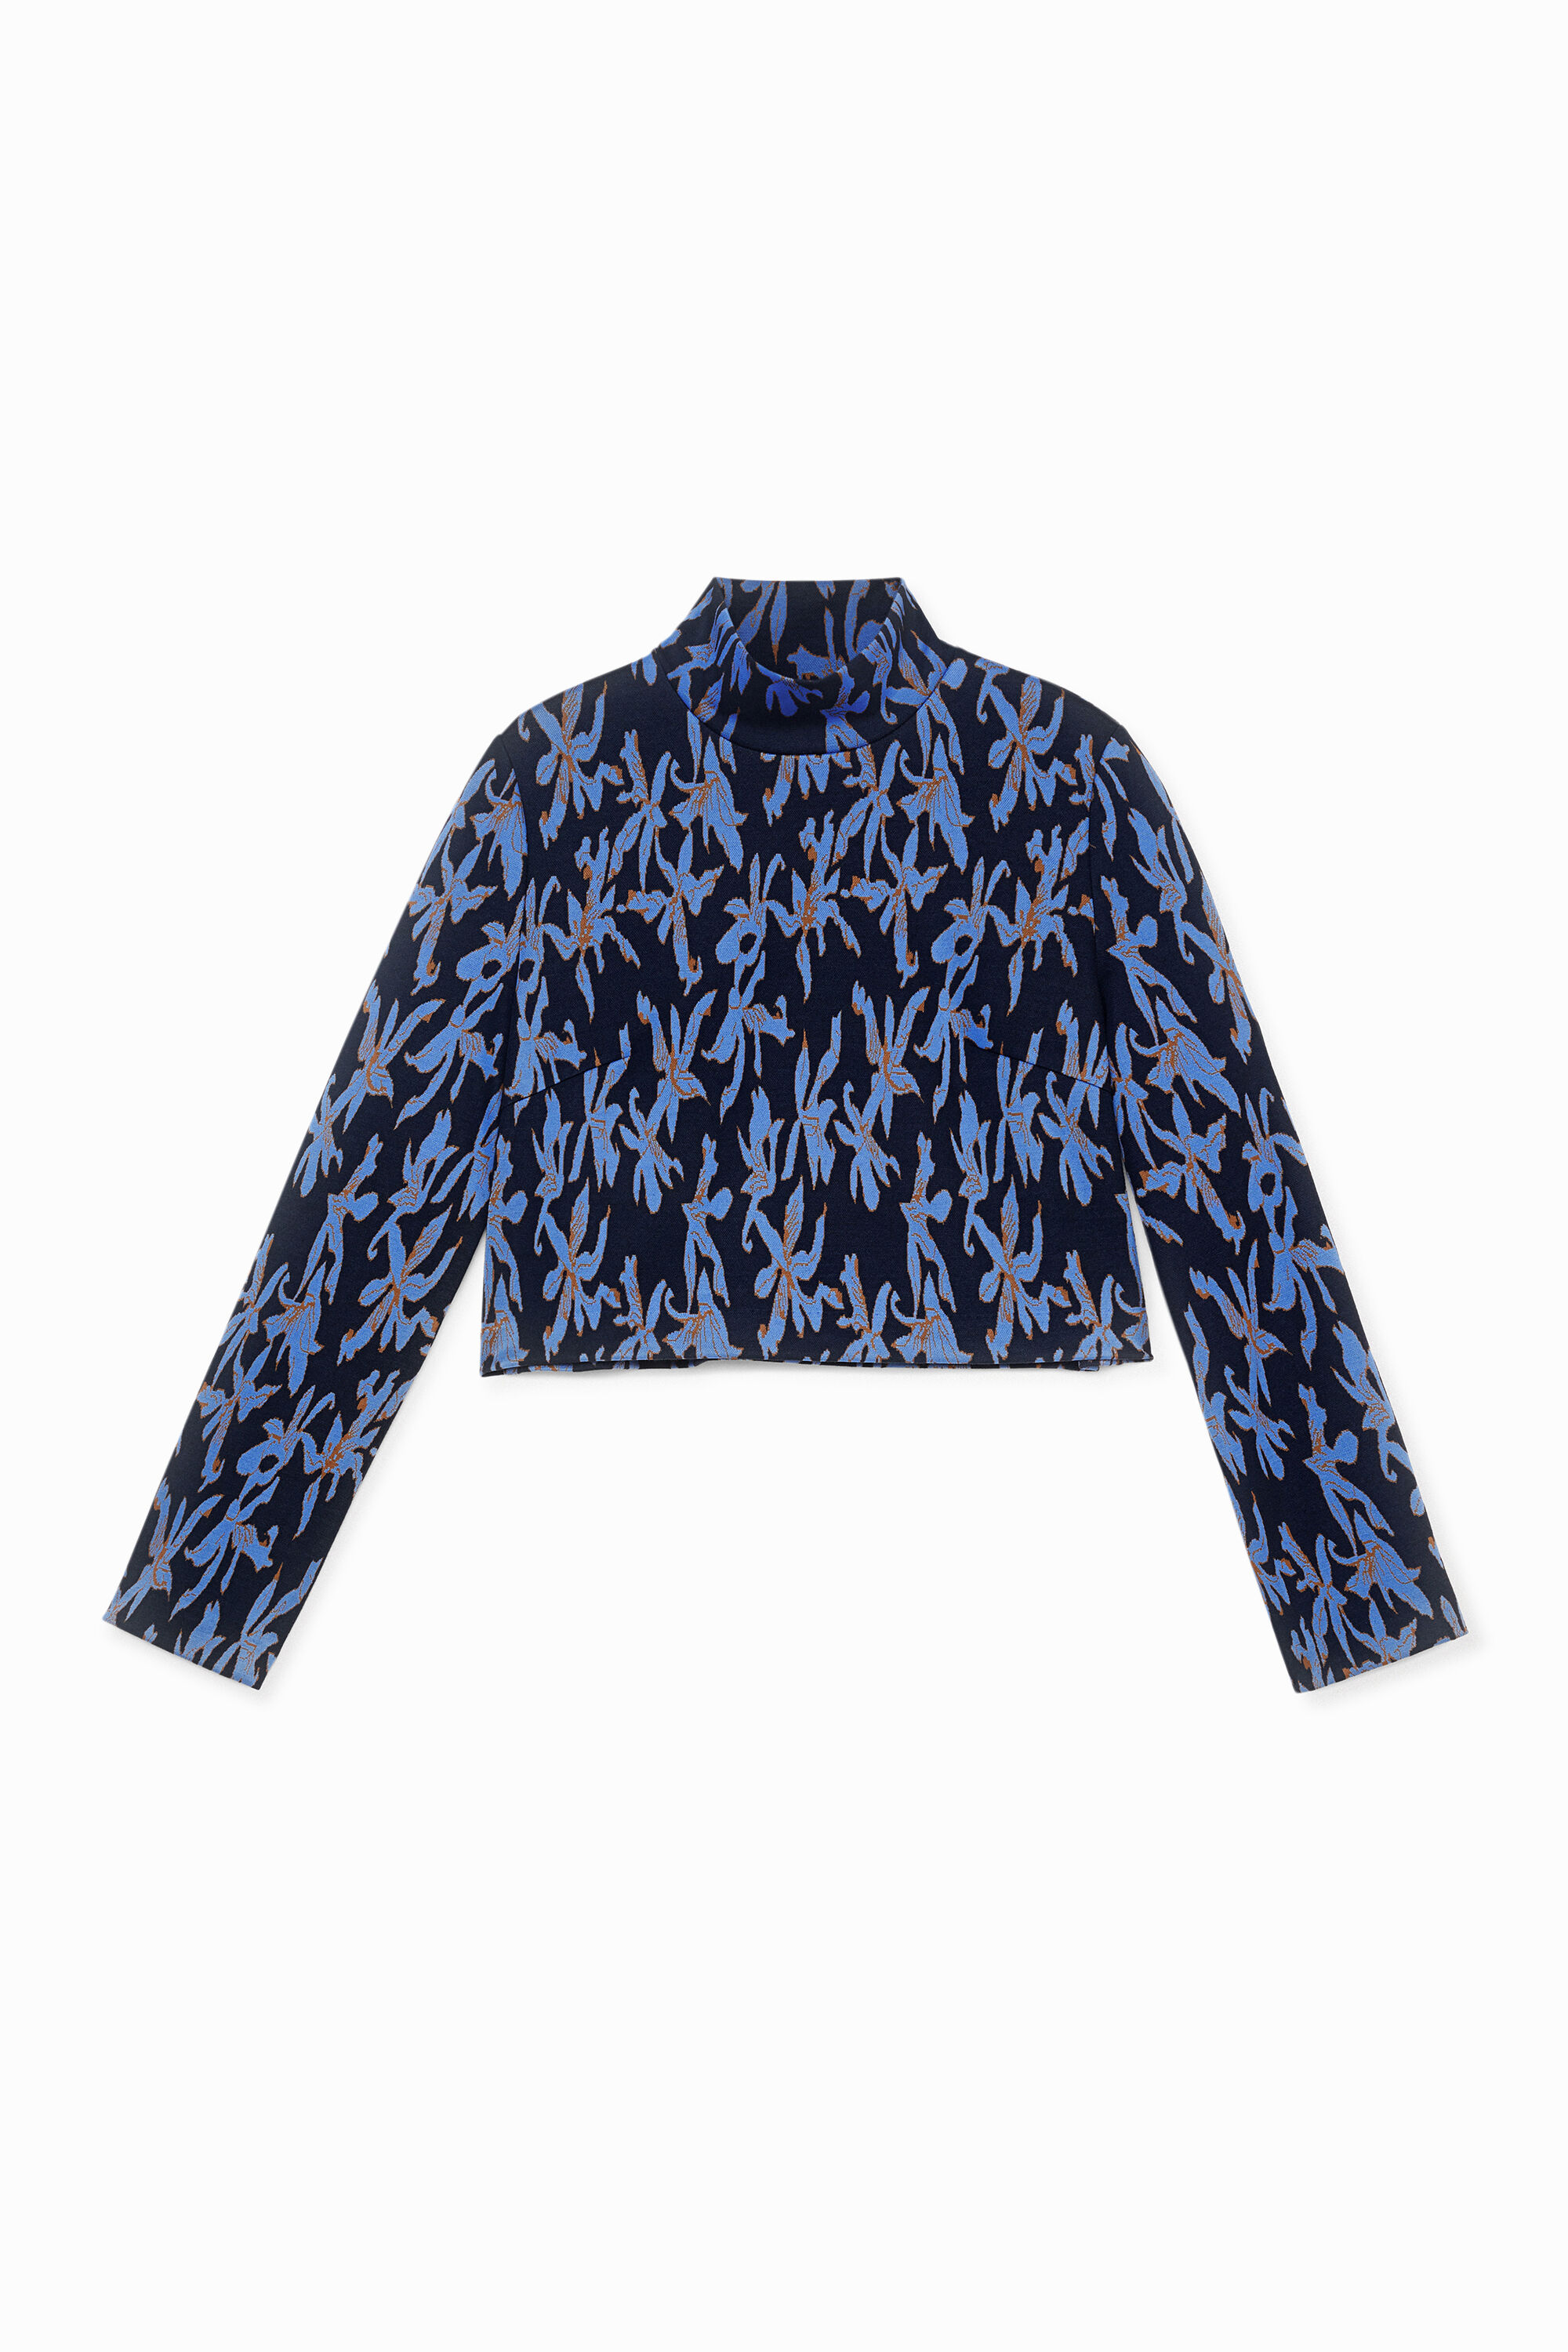 Knit jumper high neck - BLUE - S